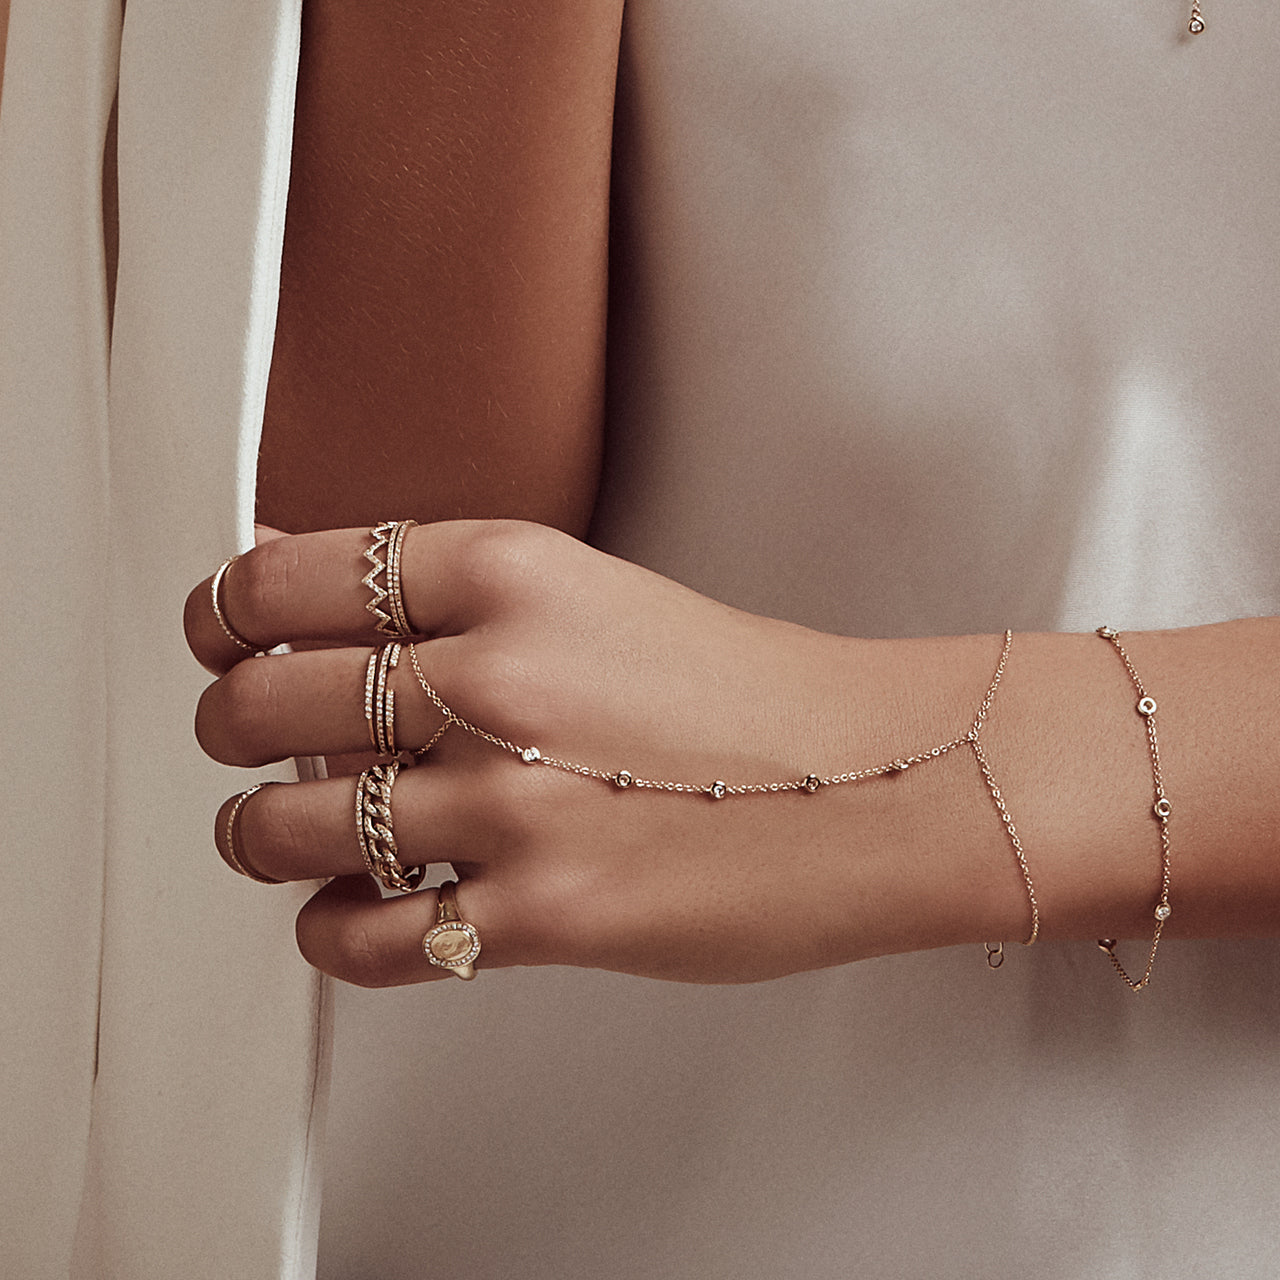 Olbye Silver Finger Ring Bracelet Dainty Hand Chain Bracelet Jewelry Gift  for Women and Girls : Amazon.in: Jewellery